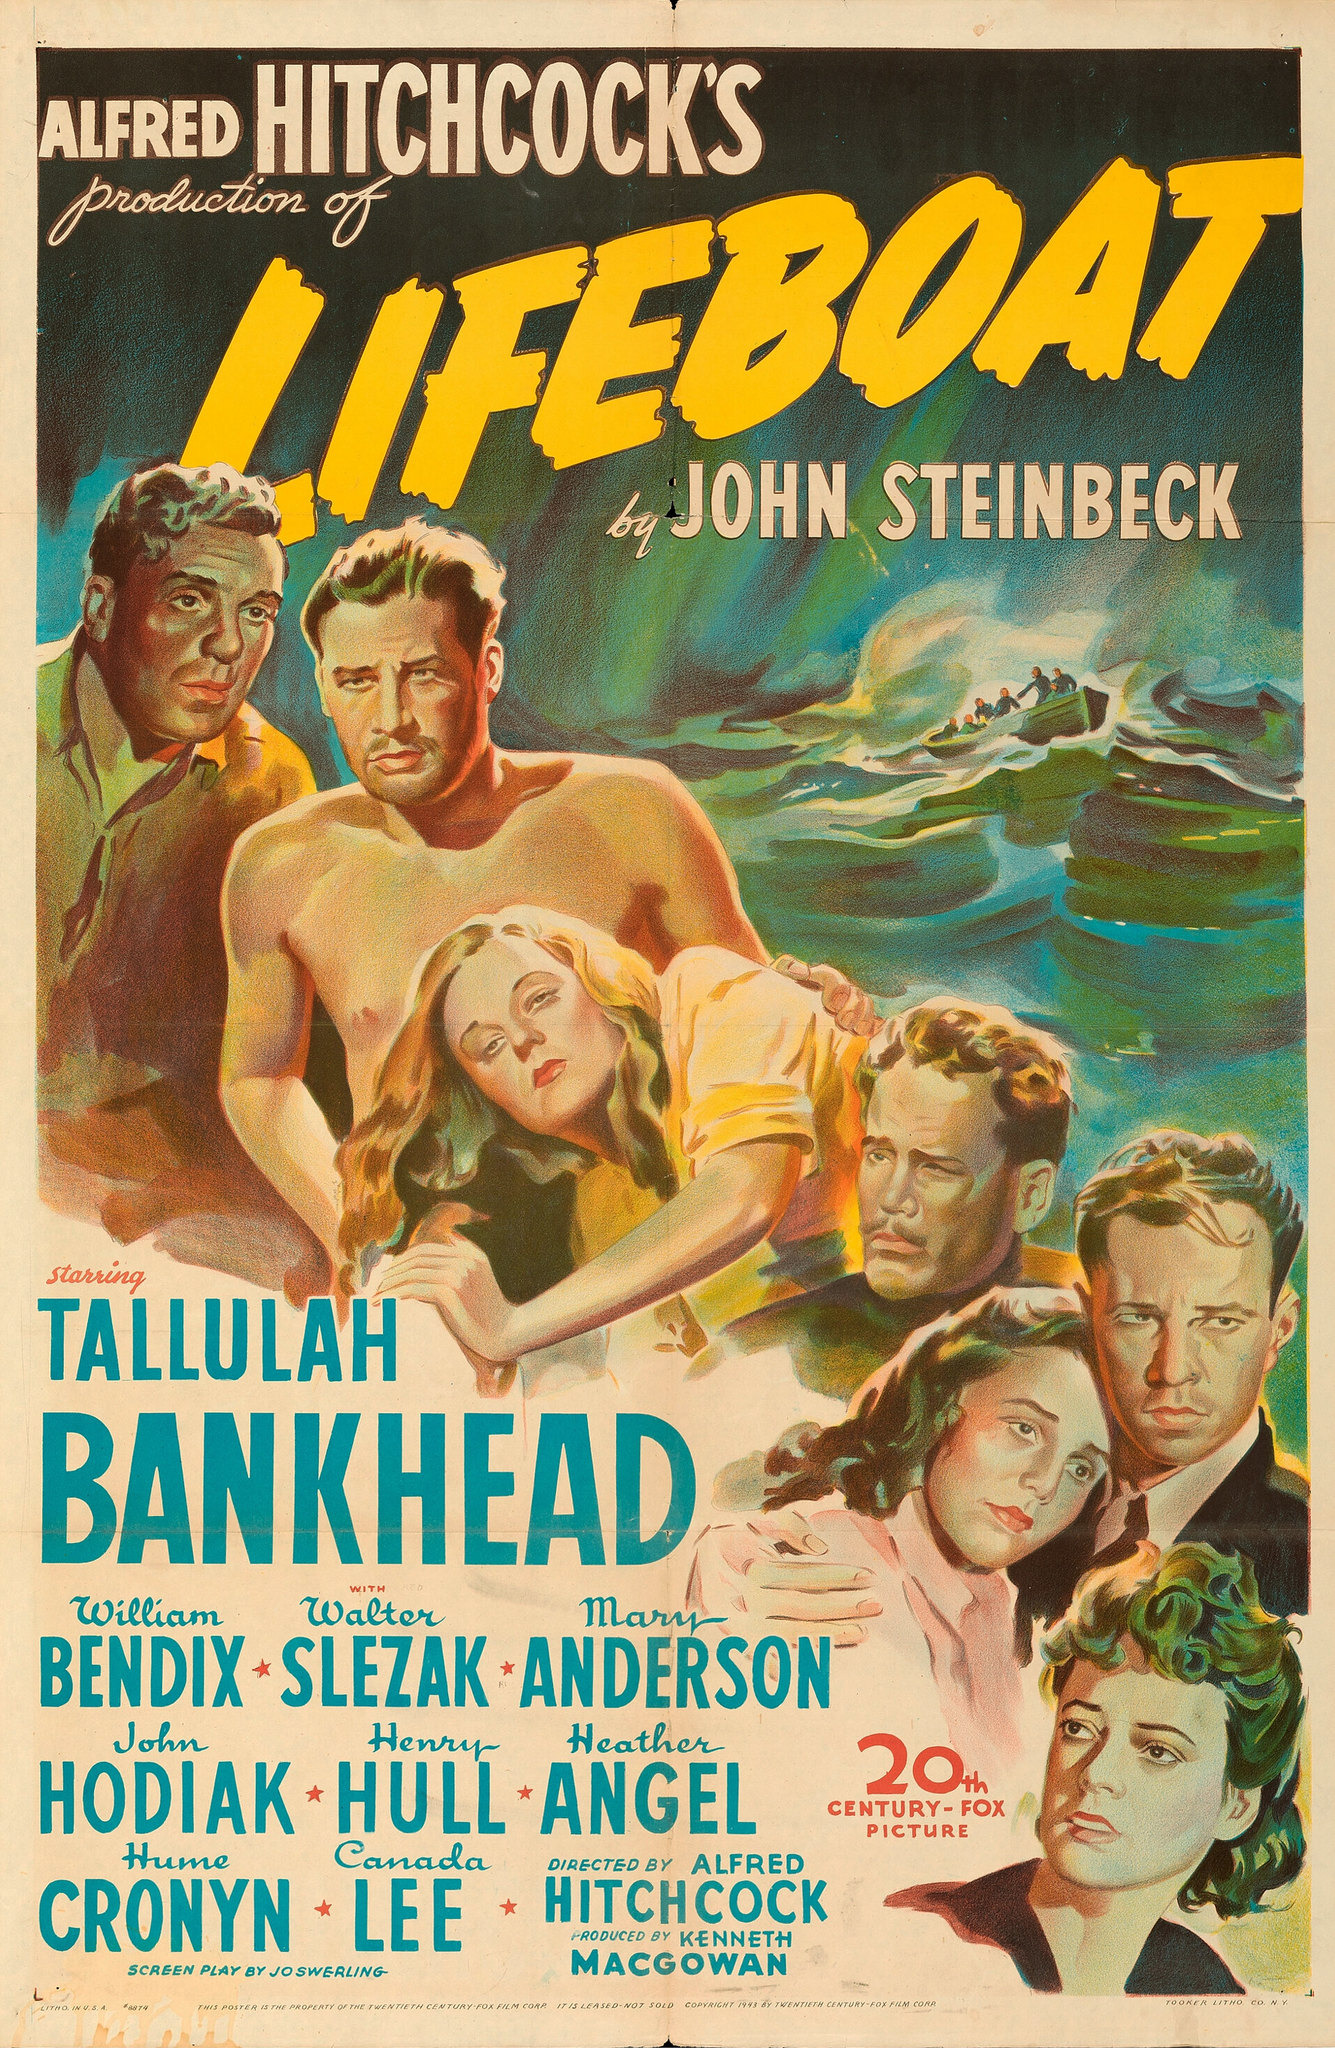 Mega Sized Movie Poster Image for Lifeboat 